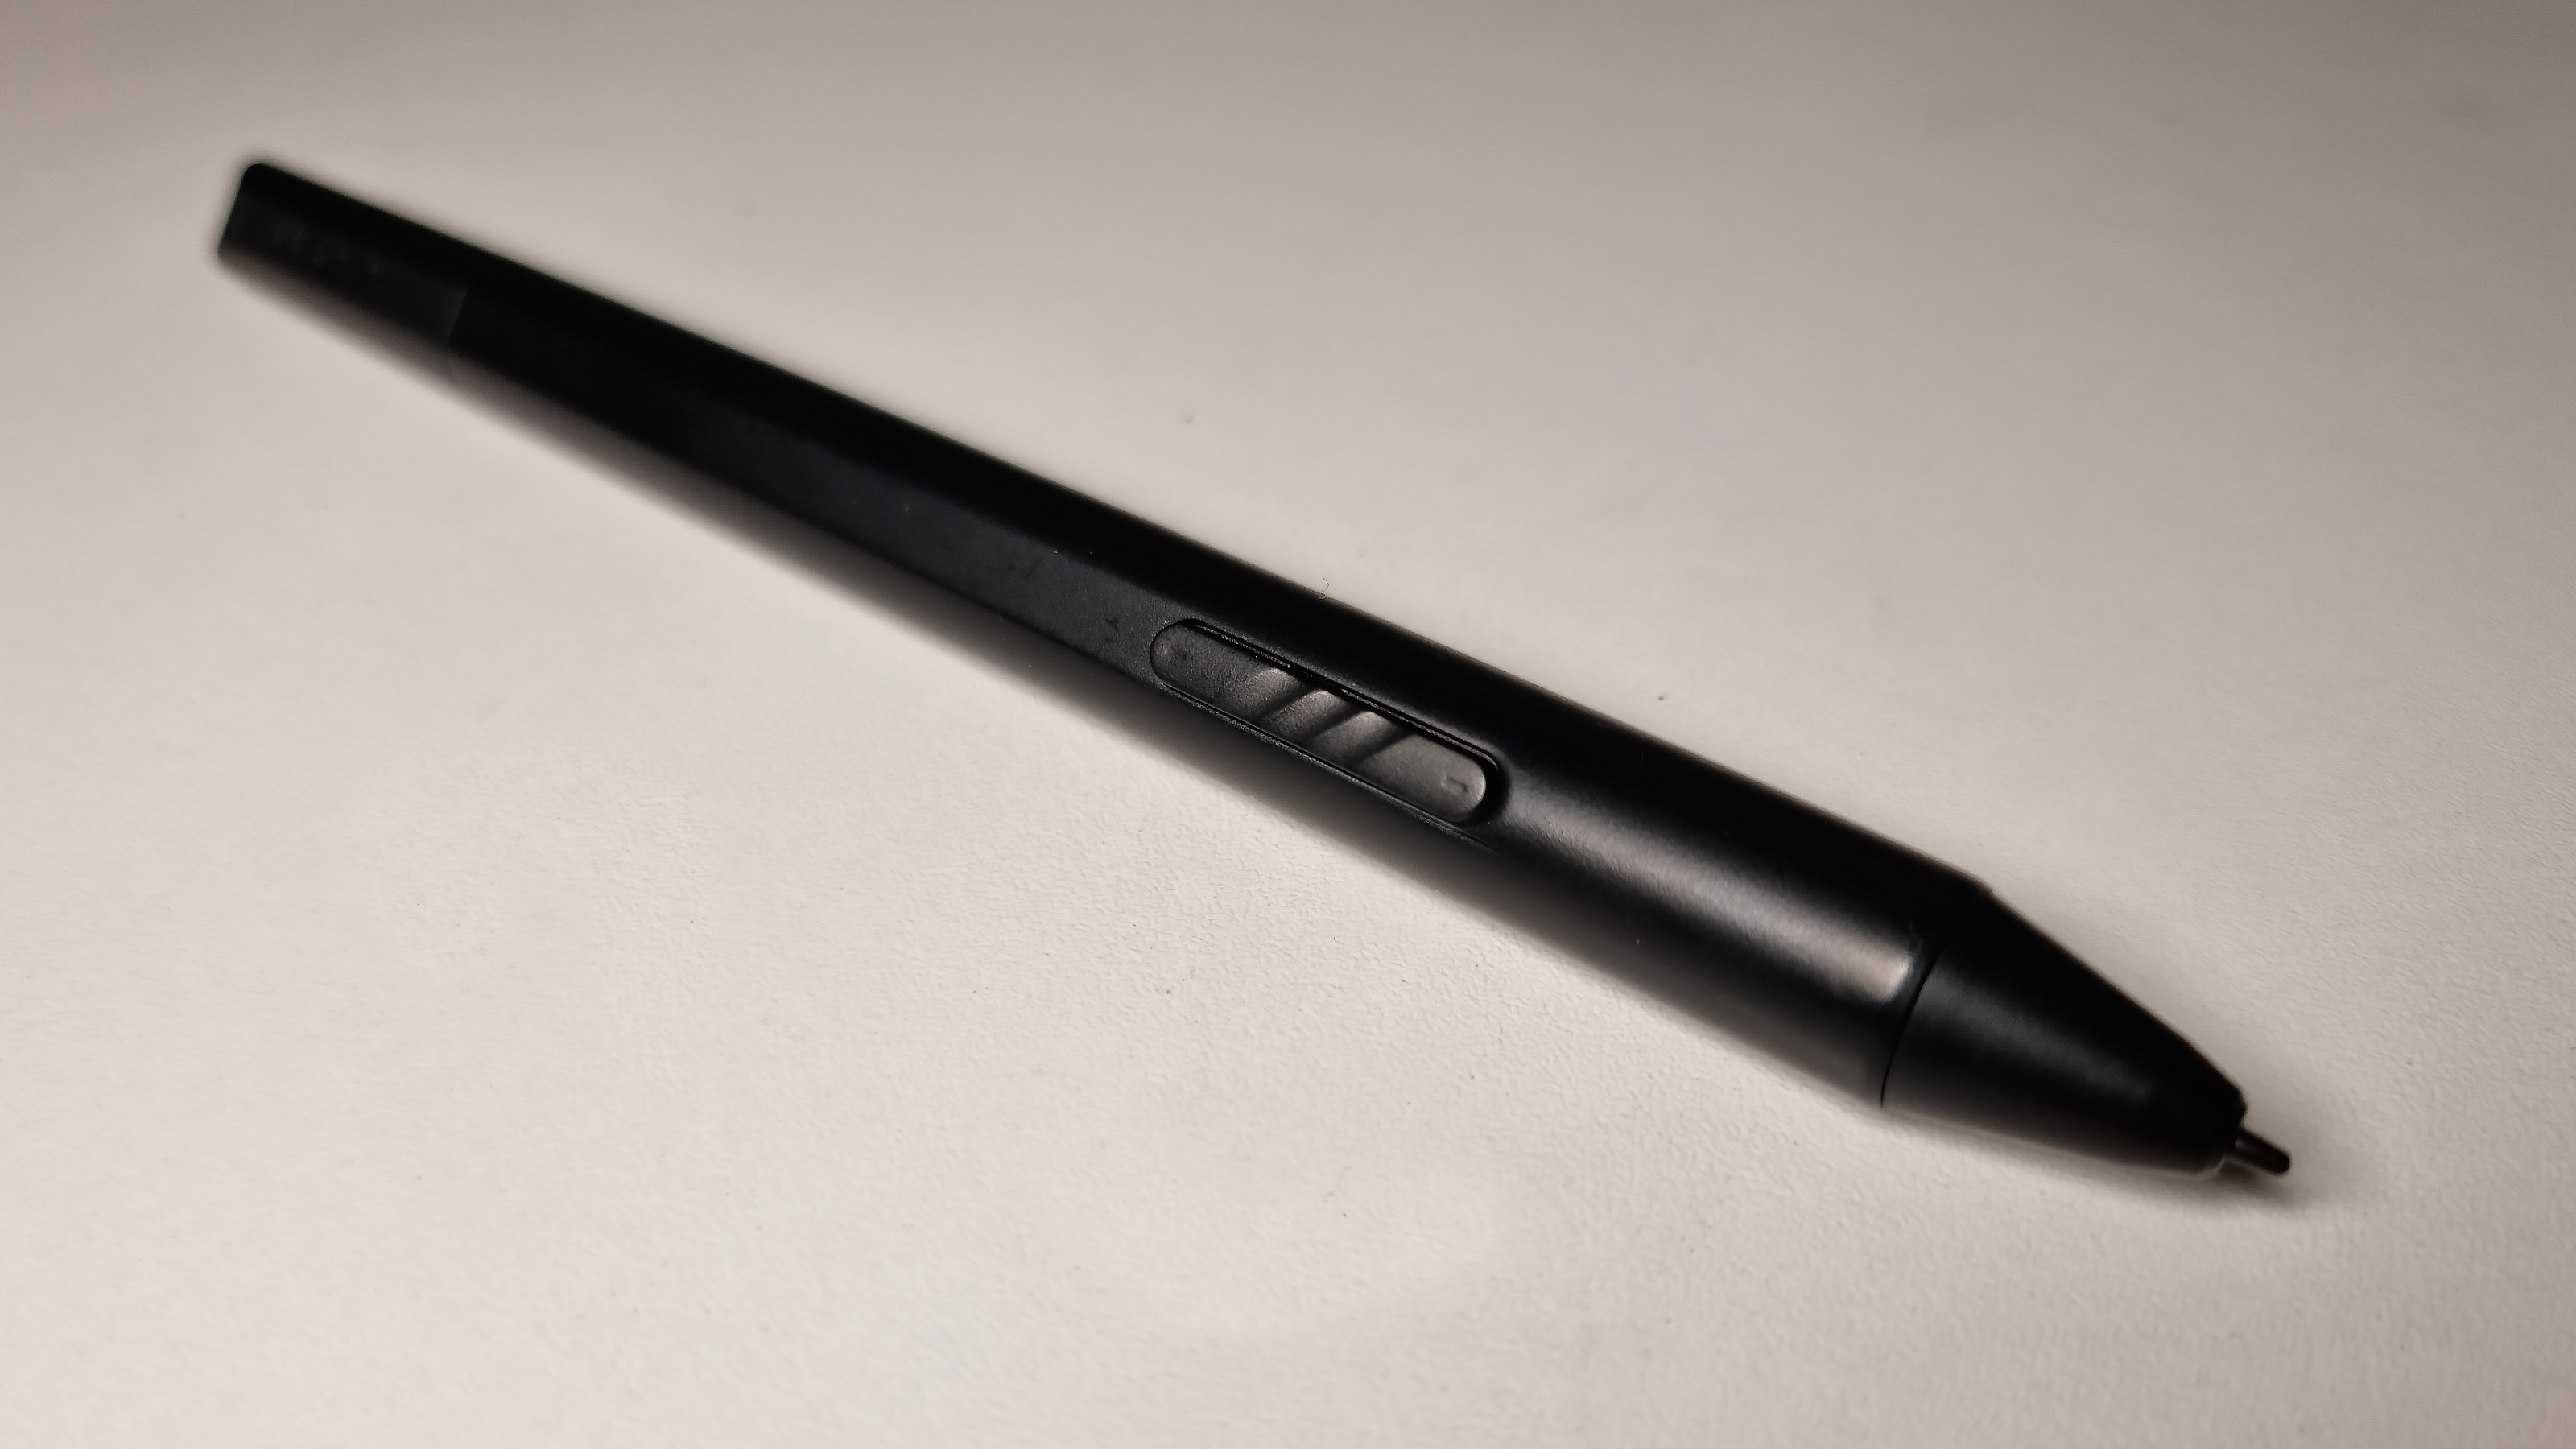 An image of an XP pen on a white desk